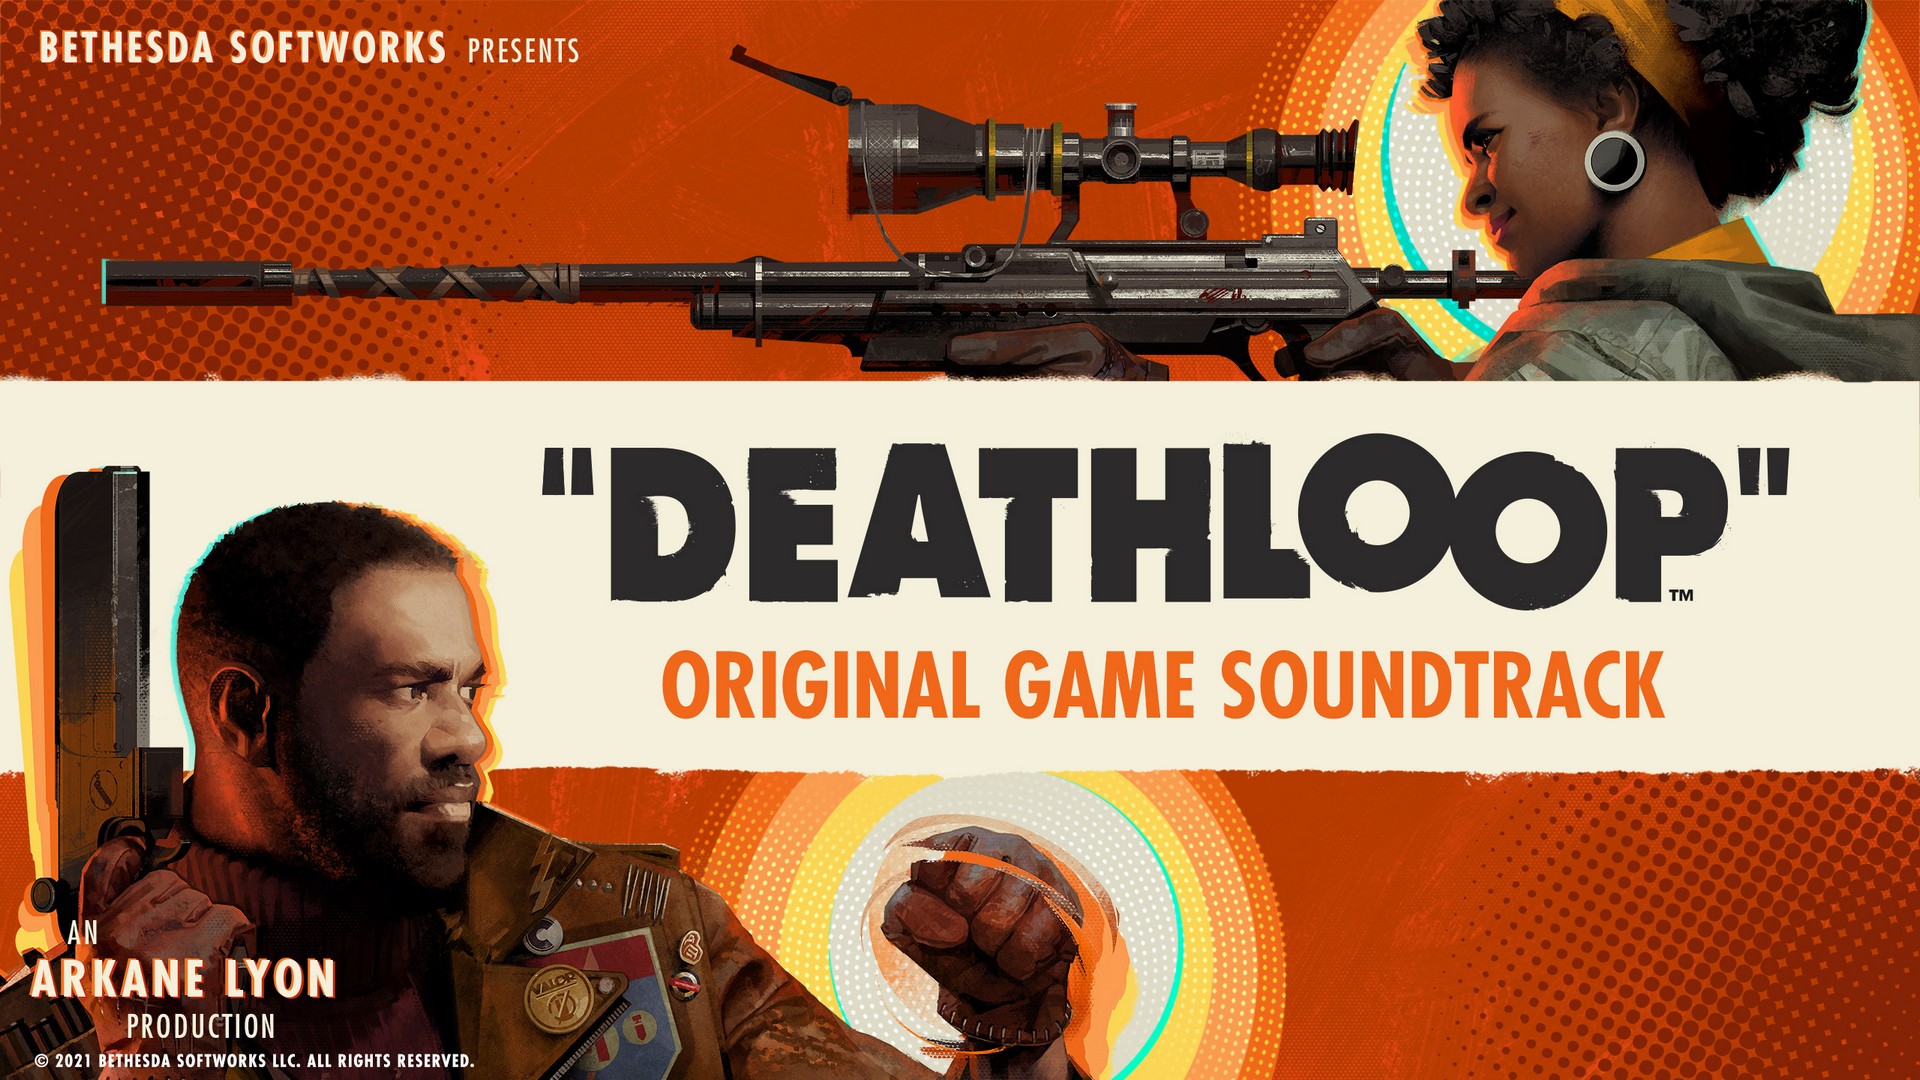 DEATHLOOP Original Soundtrack Available Now